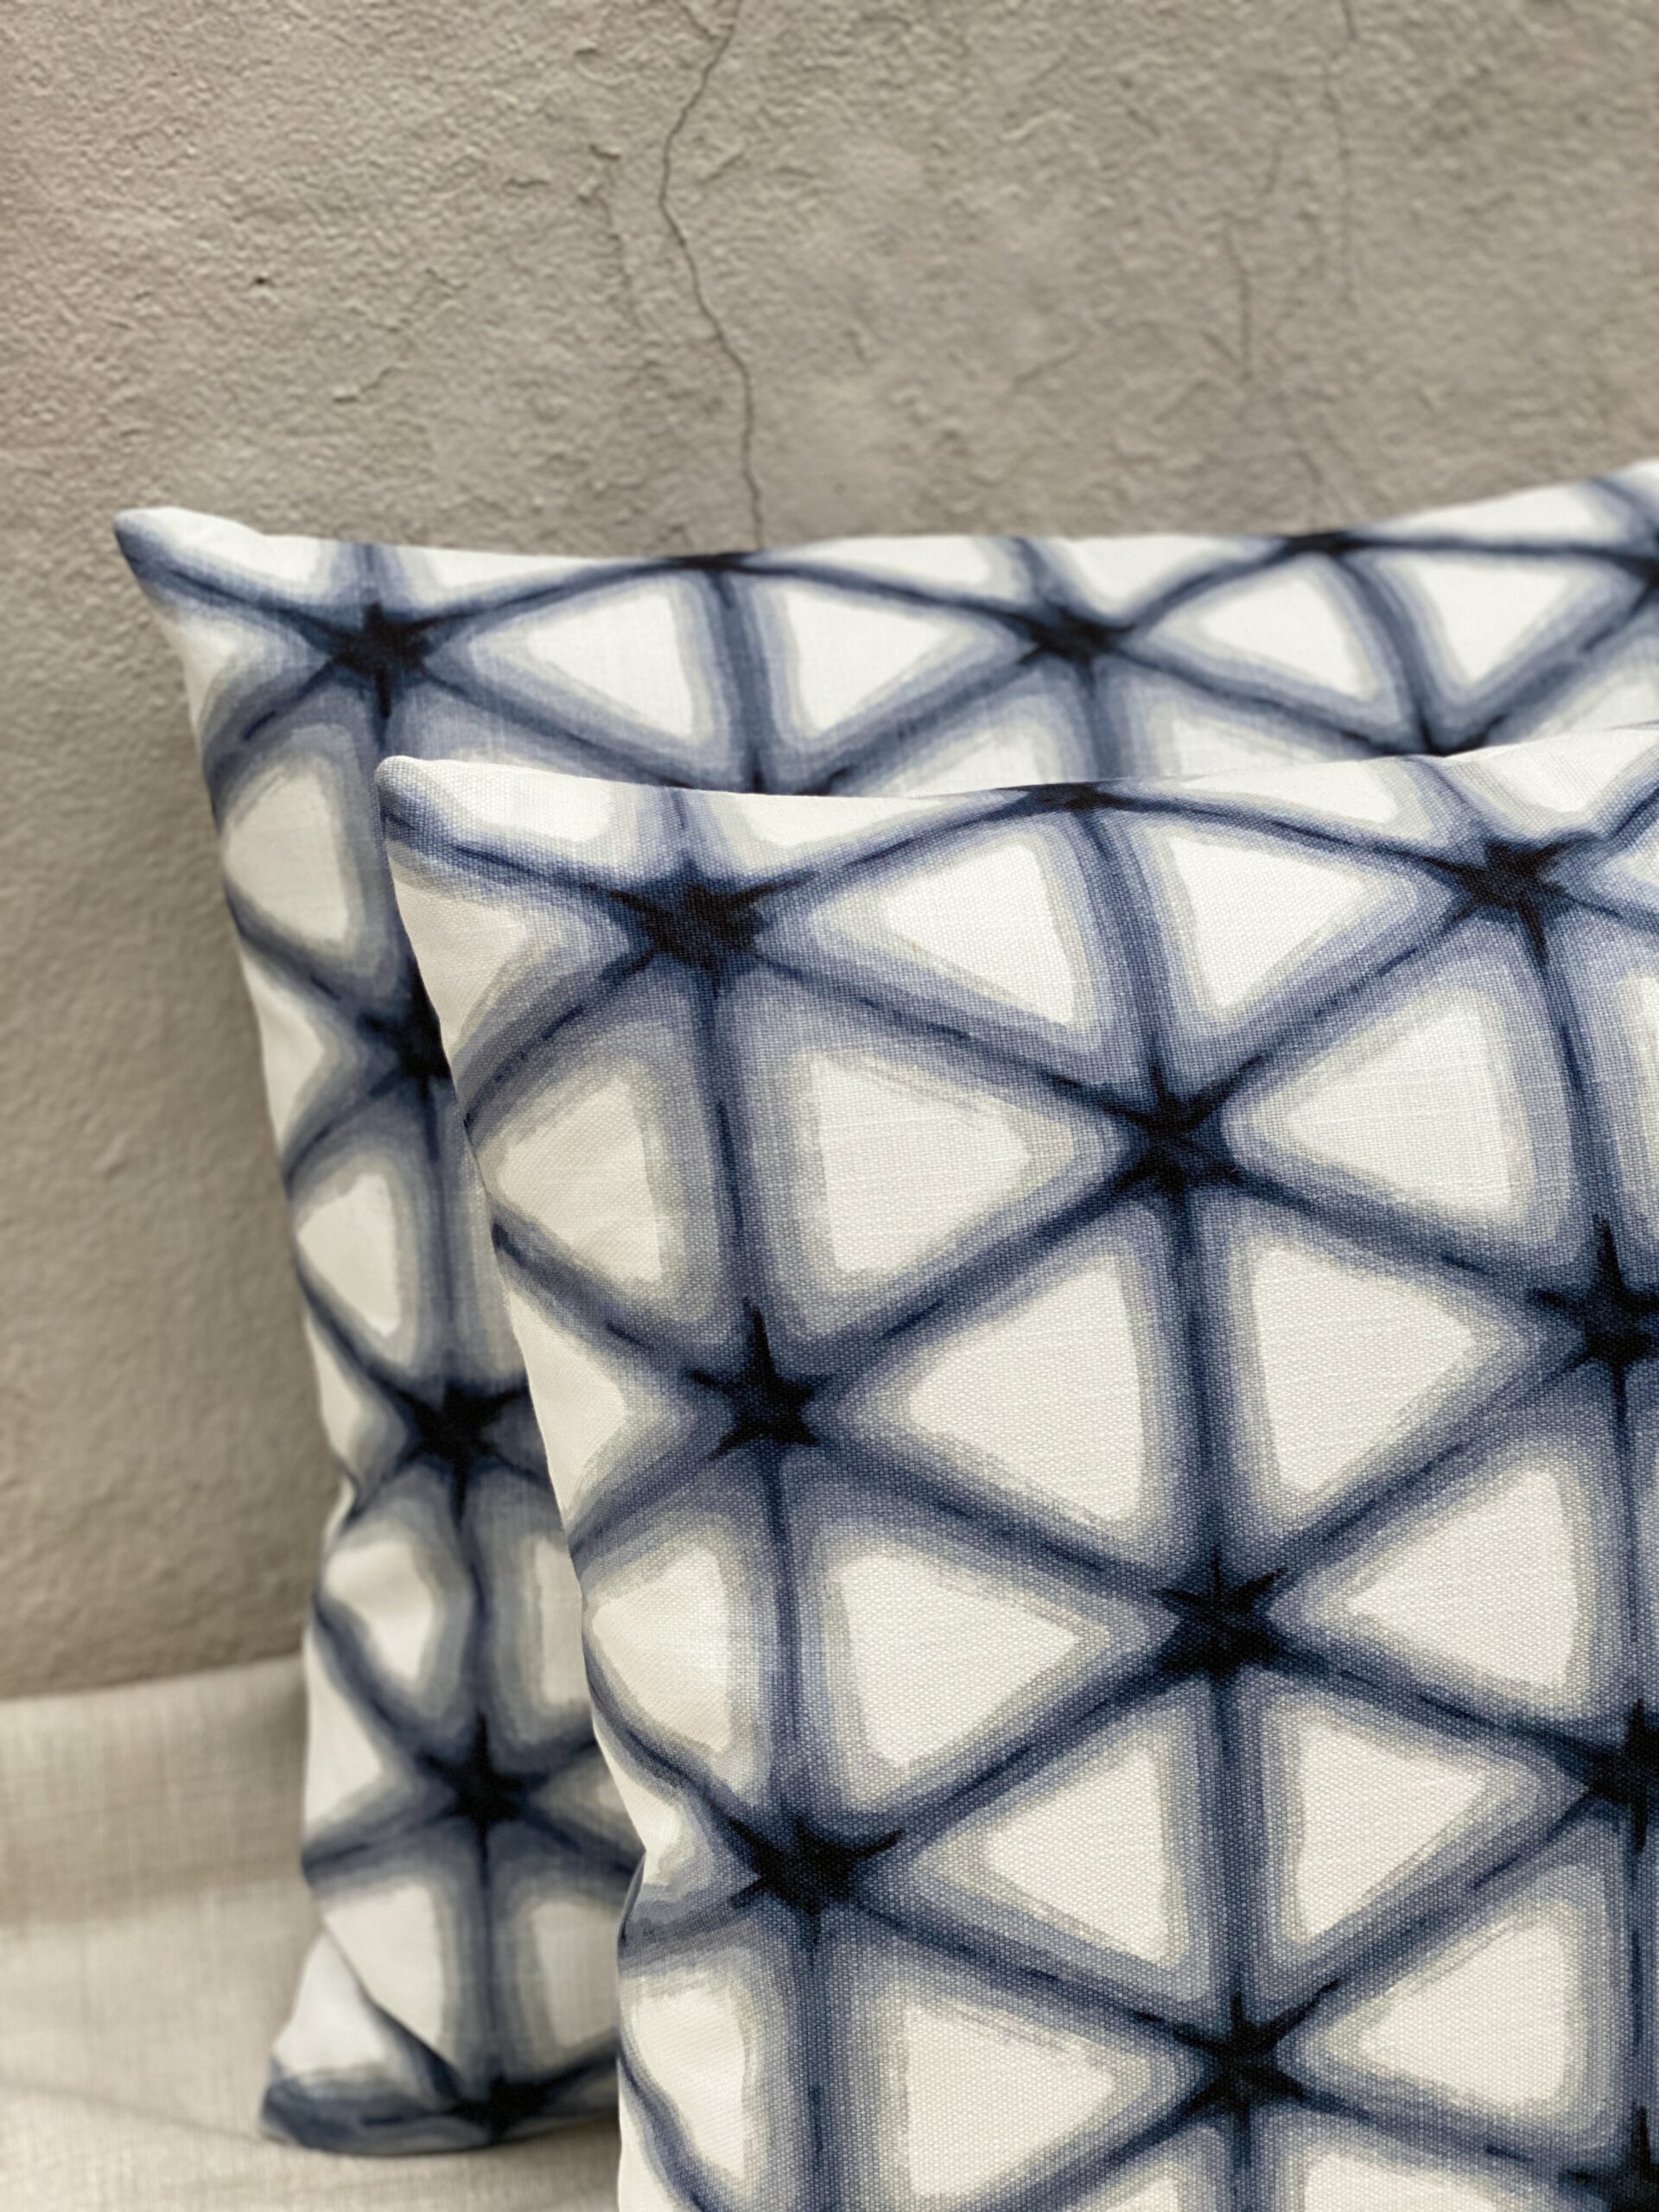 Fabricut Shibori Pillows